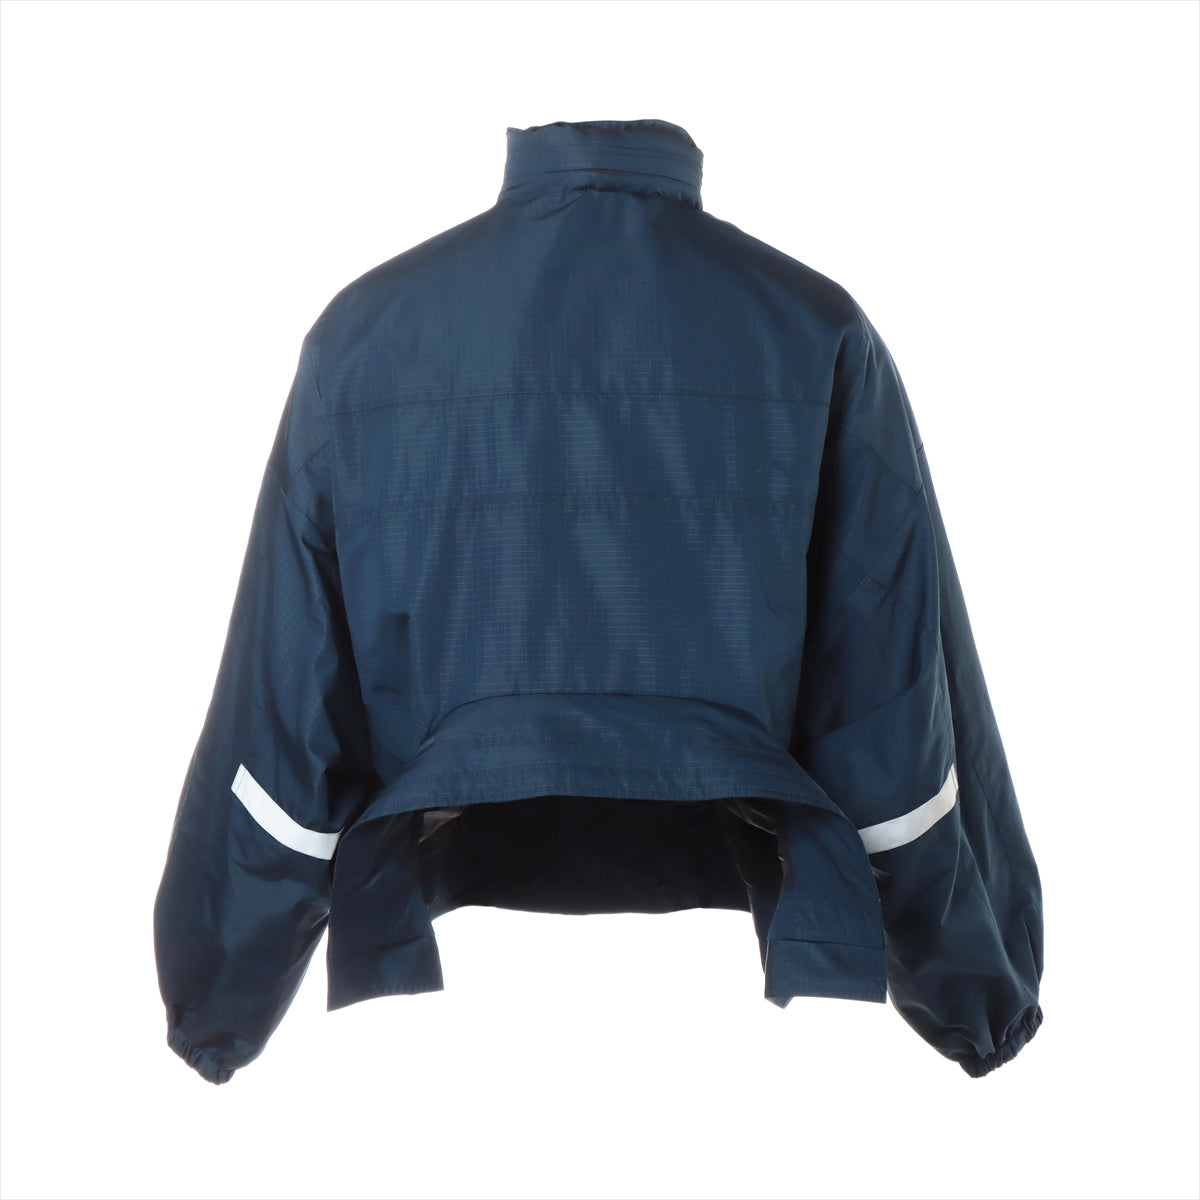 Balenciaga 20 years Polyester & nylon Nylon jacket 36 Men's Navy blue  629009 shape swing jacket